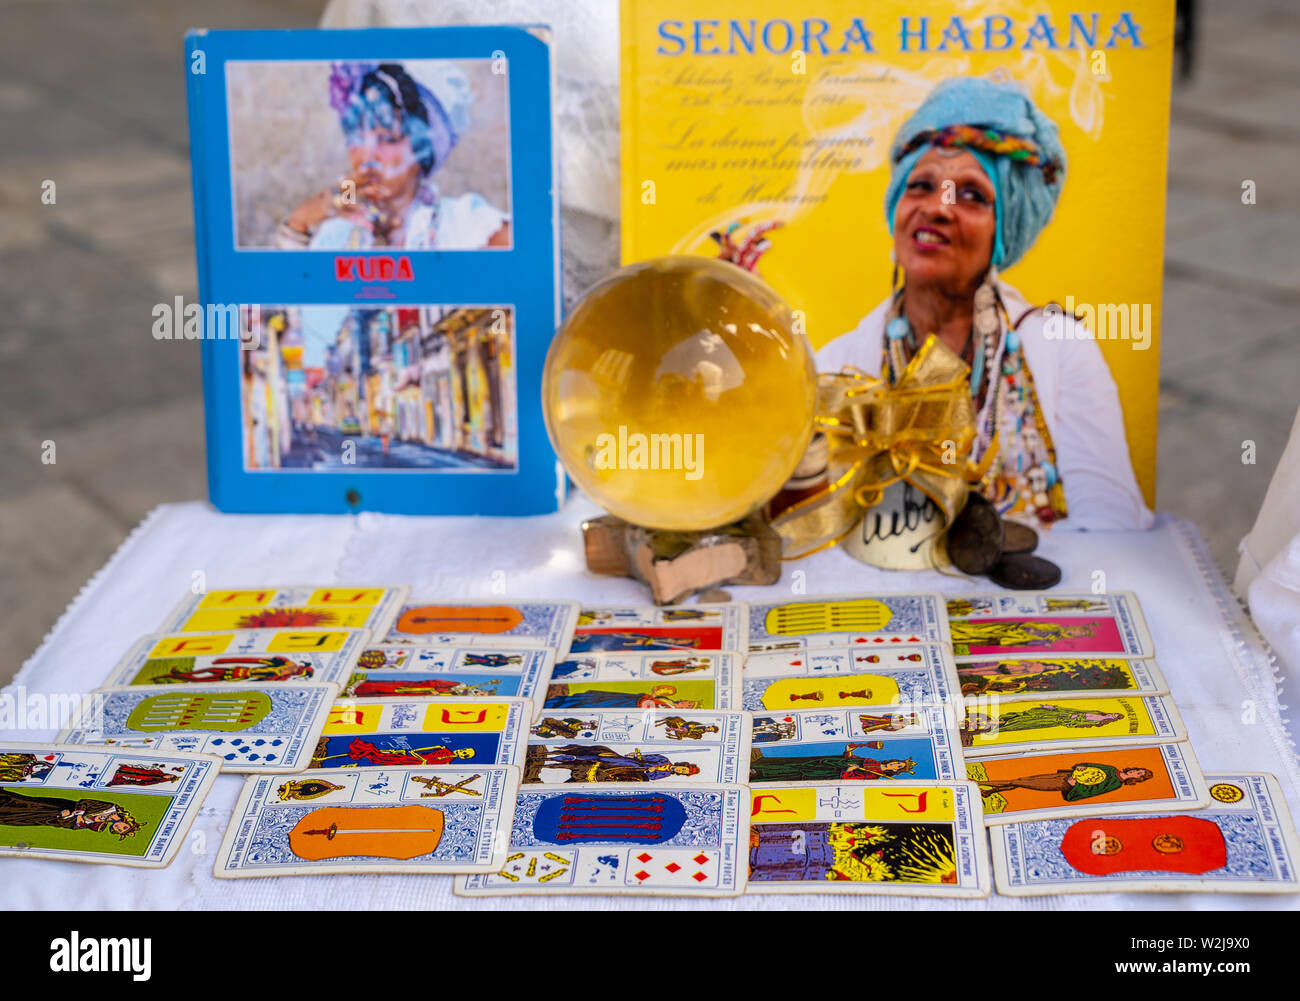 Plaza de la Catedral, Havana, Cuba - Gennaio 2, 2019: la sacerdotessa afro-cubane o Santera La Señora Habana la mostra delle sue carte dei tarocchi. Foto Stock